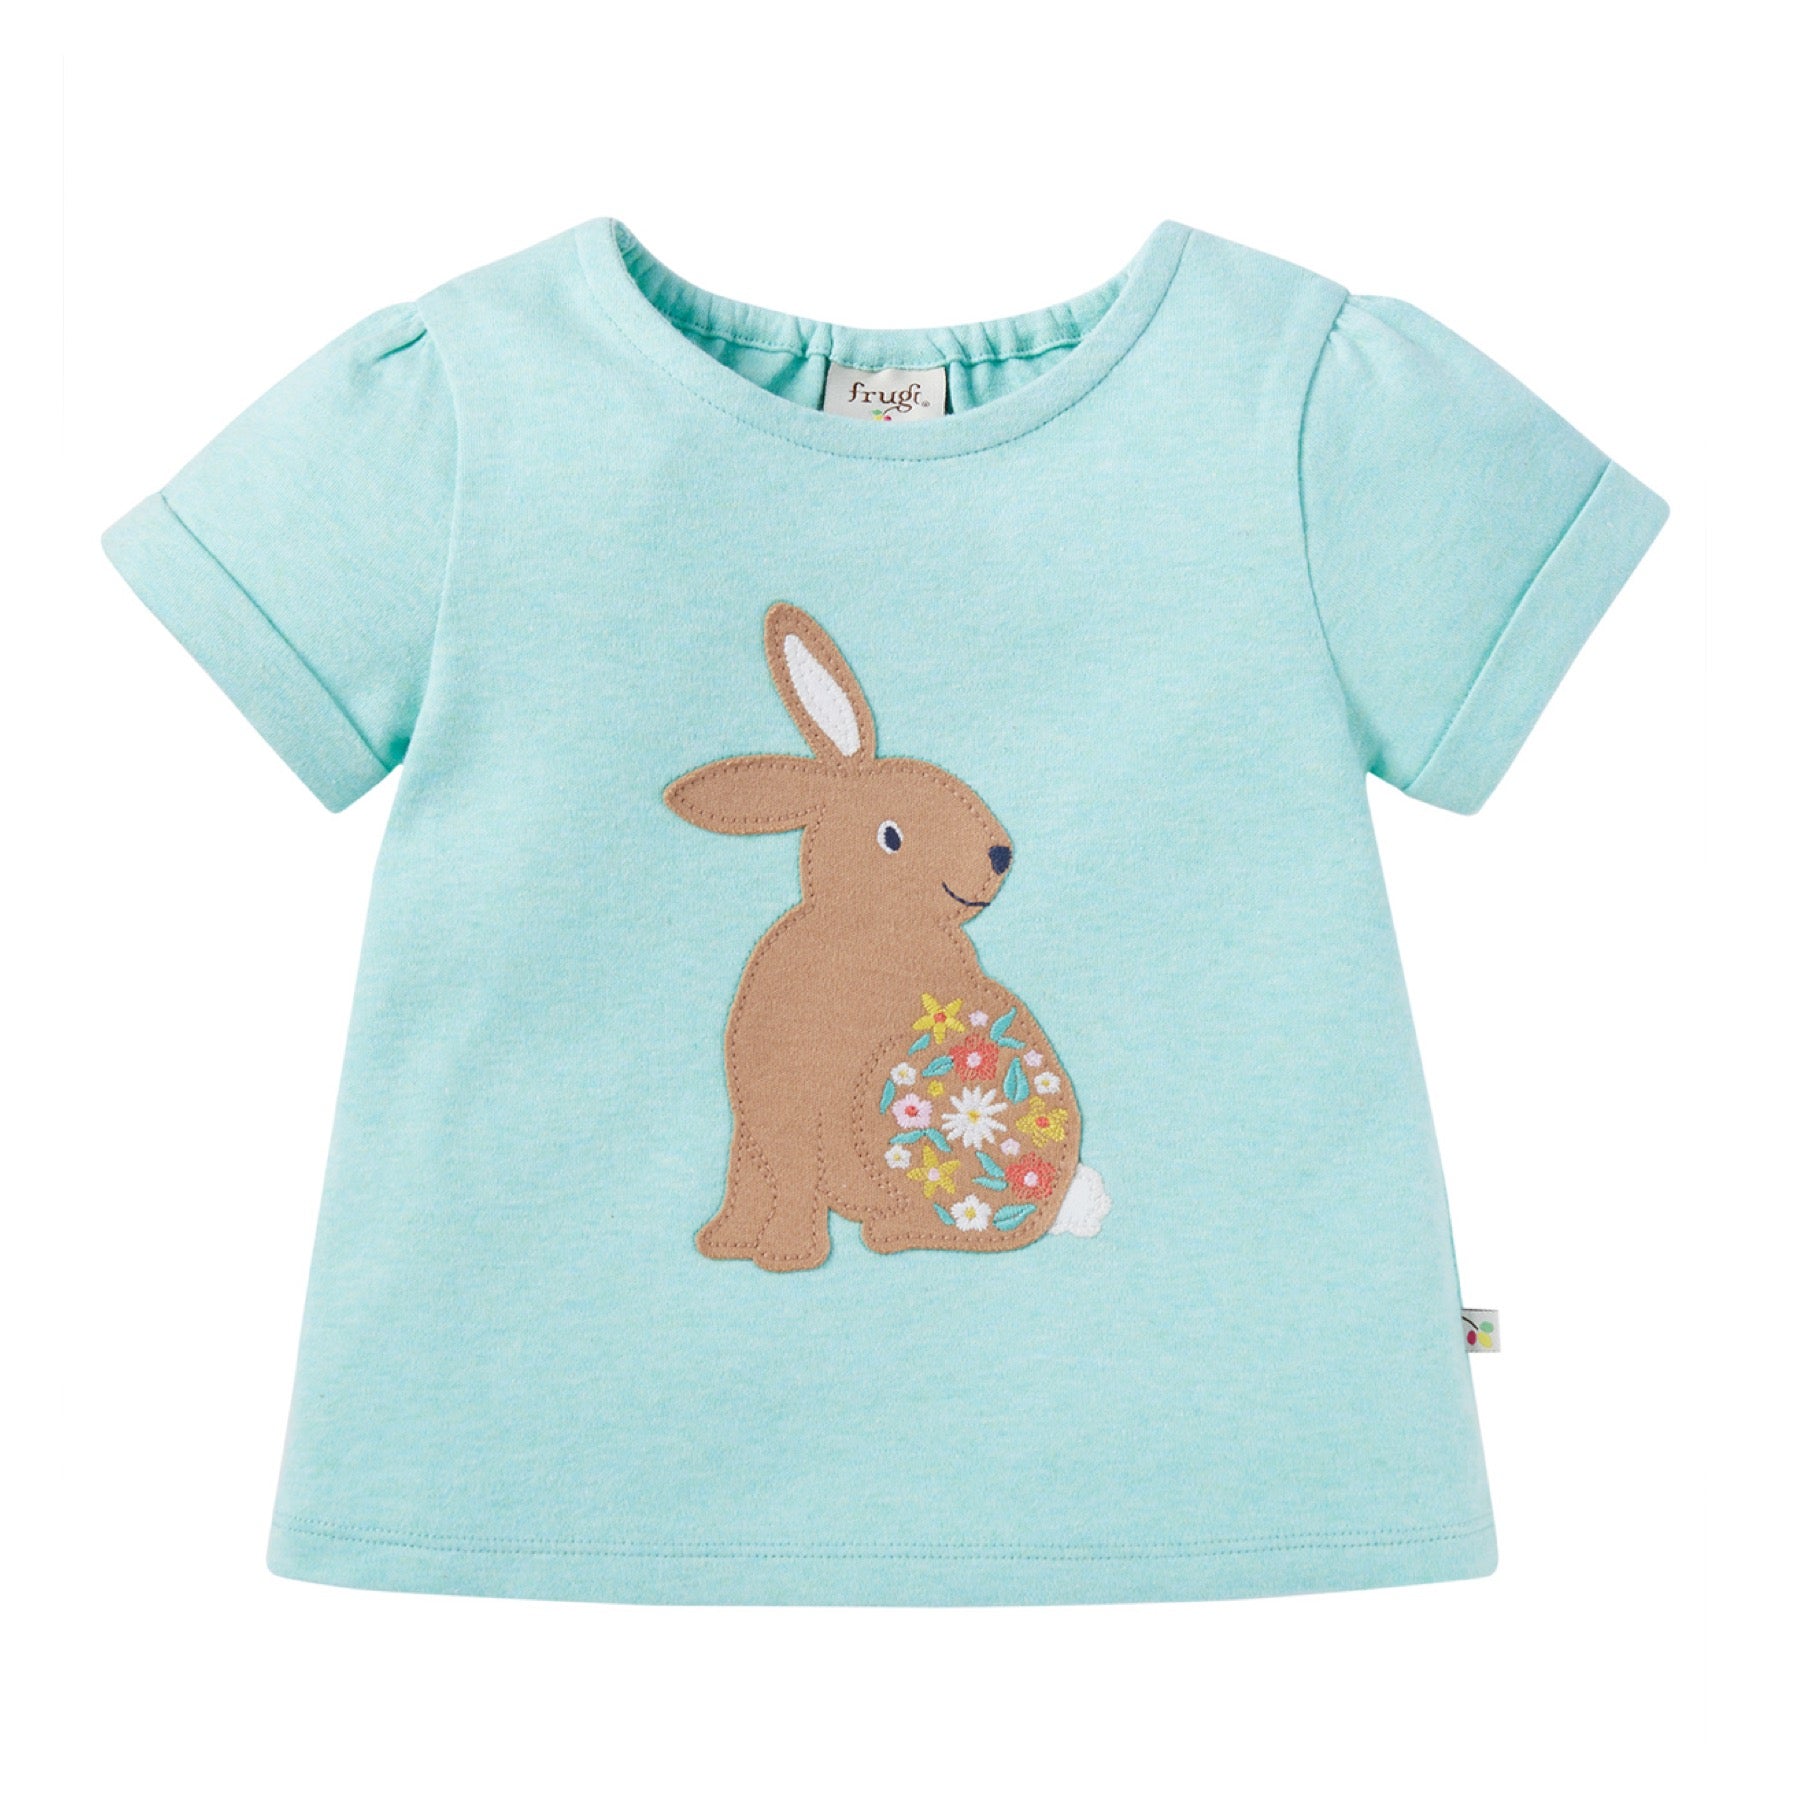 Frugi Evie Applique T-Shirt Spring Mint Marl/Rabbit